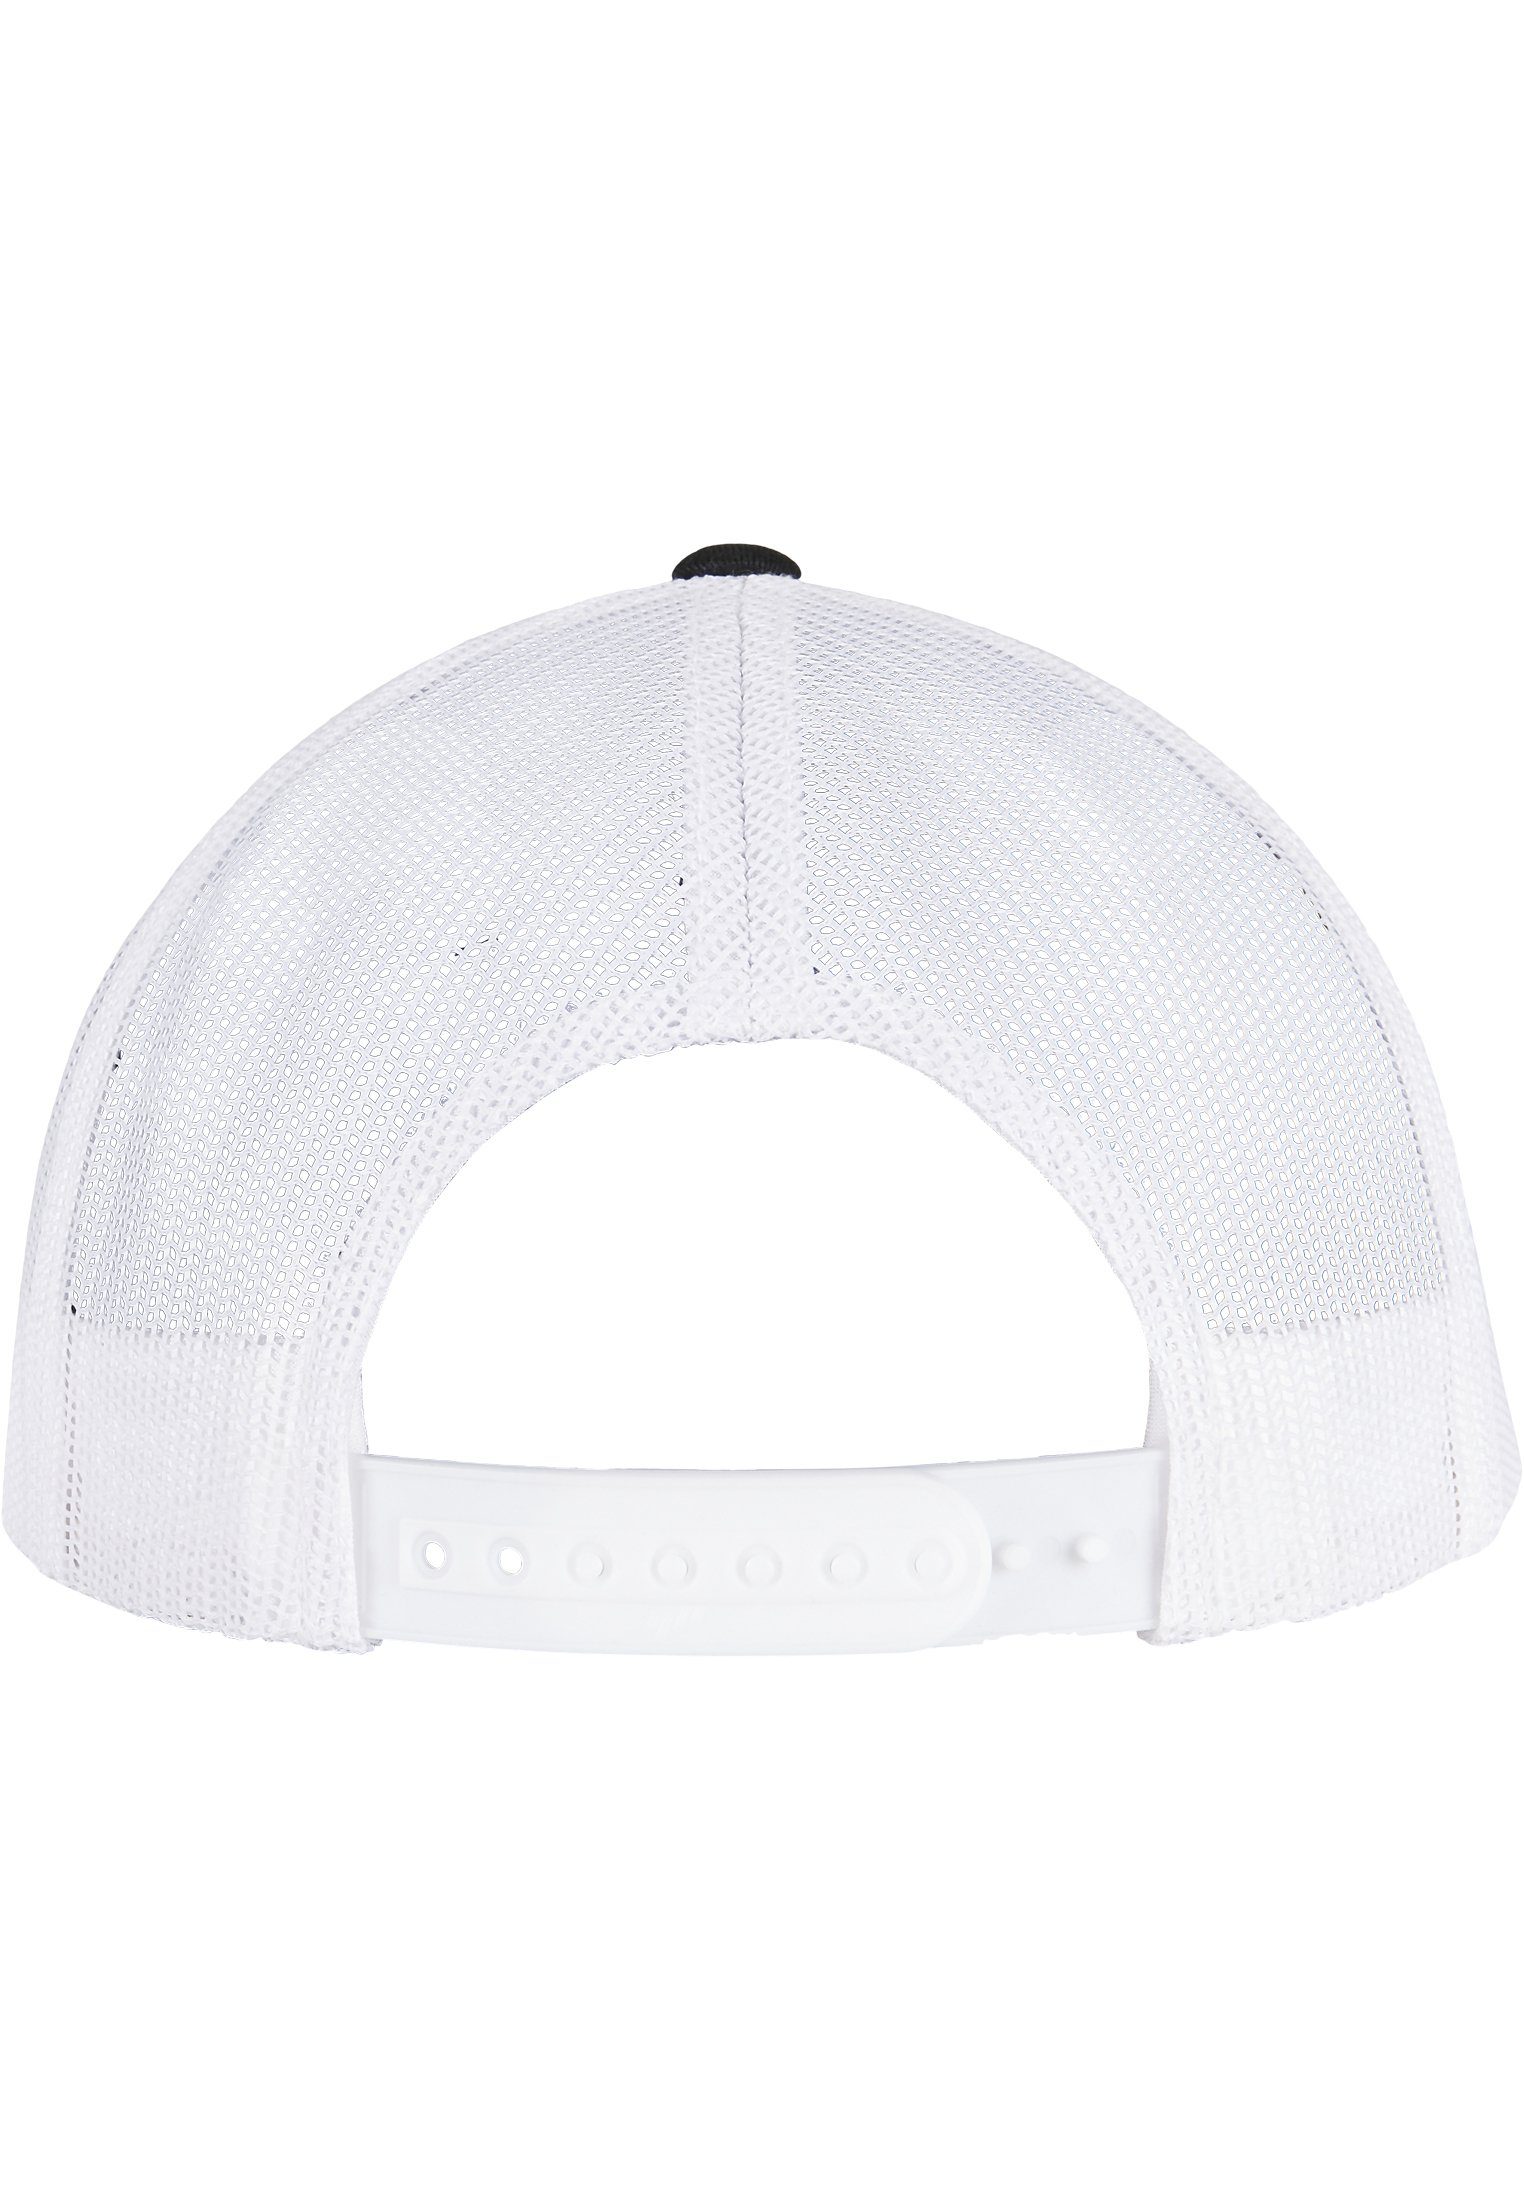 2-TONE balck/white Flex CAP RETRO CLASSICS TRUCKER Cap Caps YP Flexfit RECYCLED